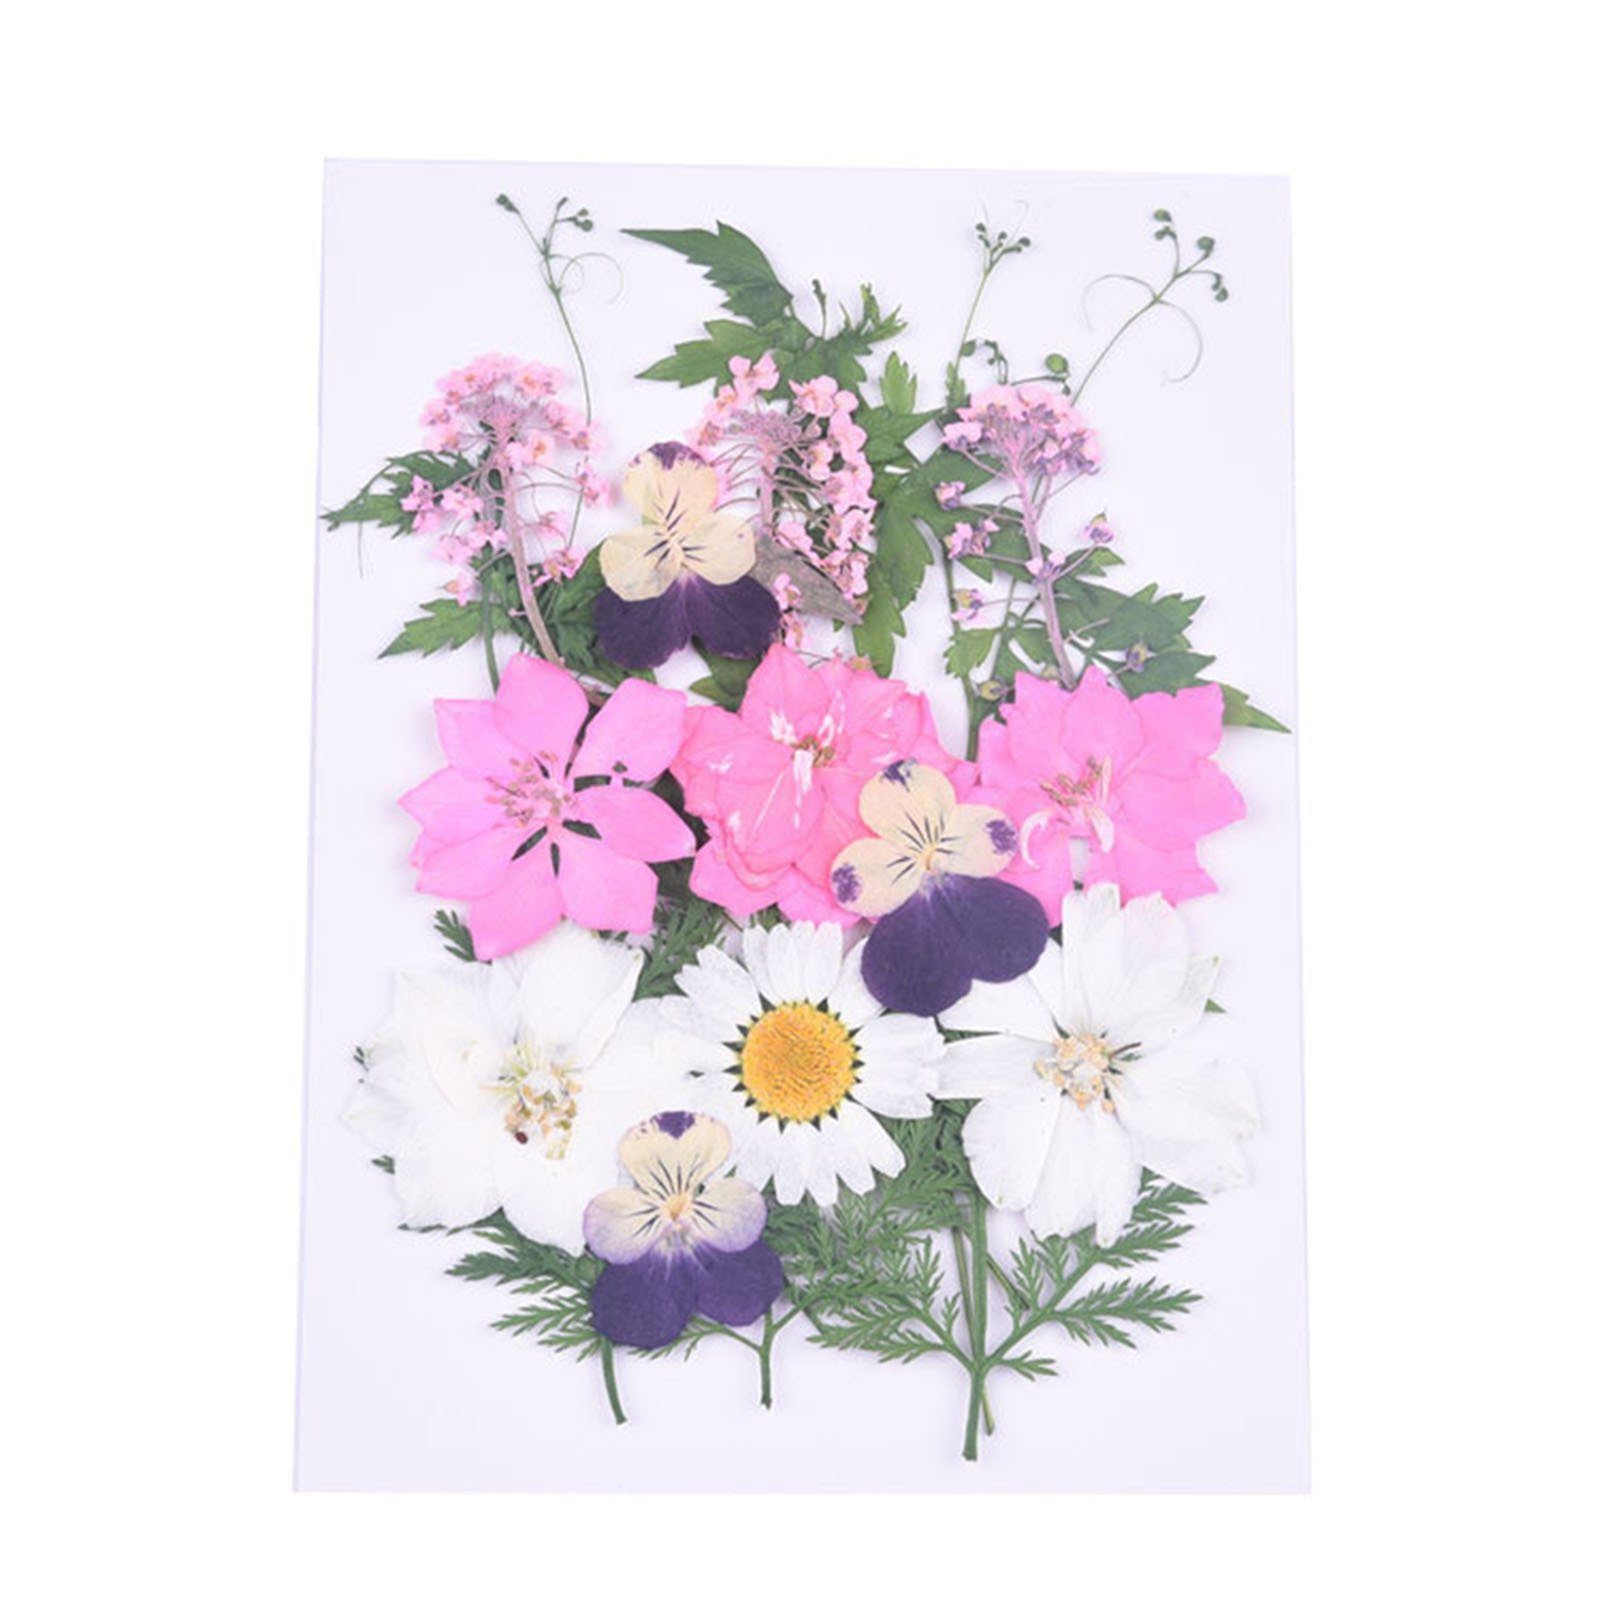 7 Blumen, Getrocknete Blusmart Trockenblume Kleine Trockene, Scrapbooking, combination Blumen, Gepresste